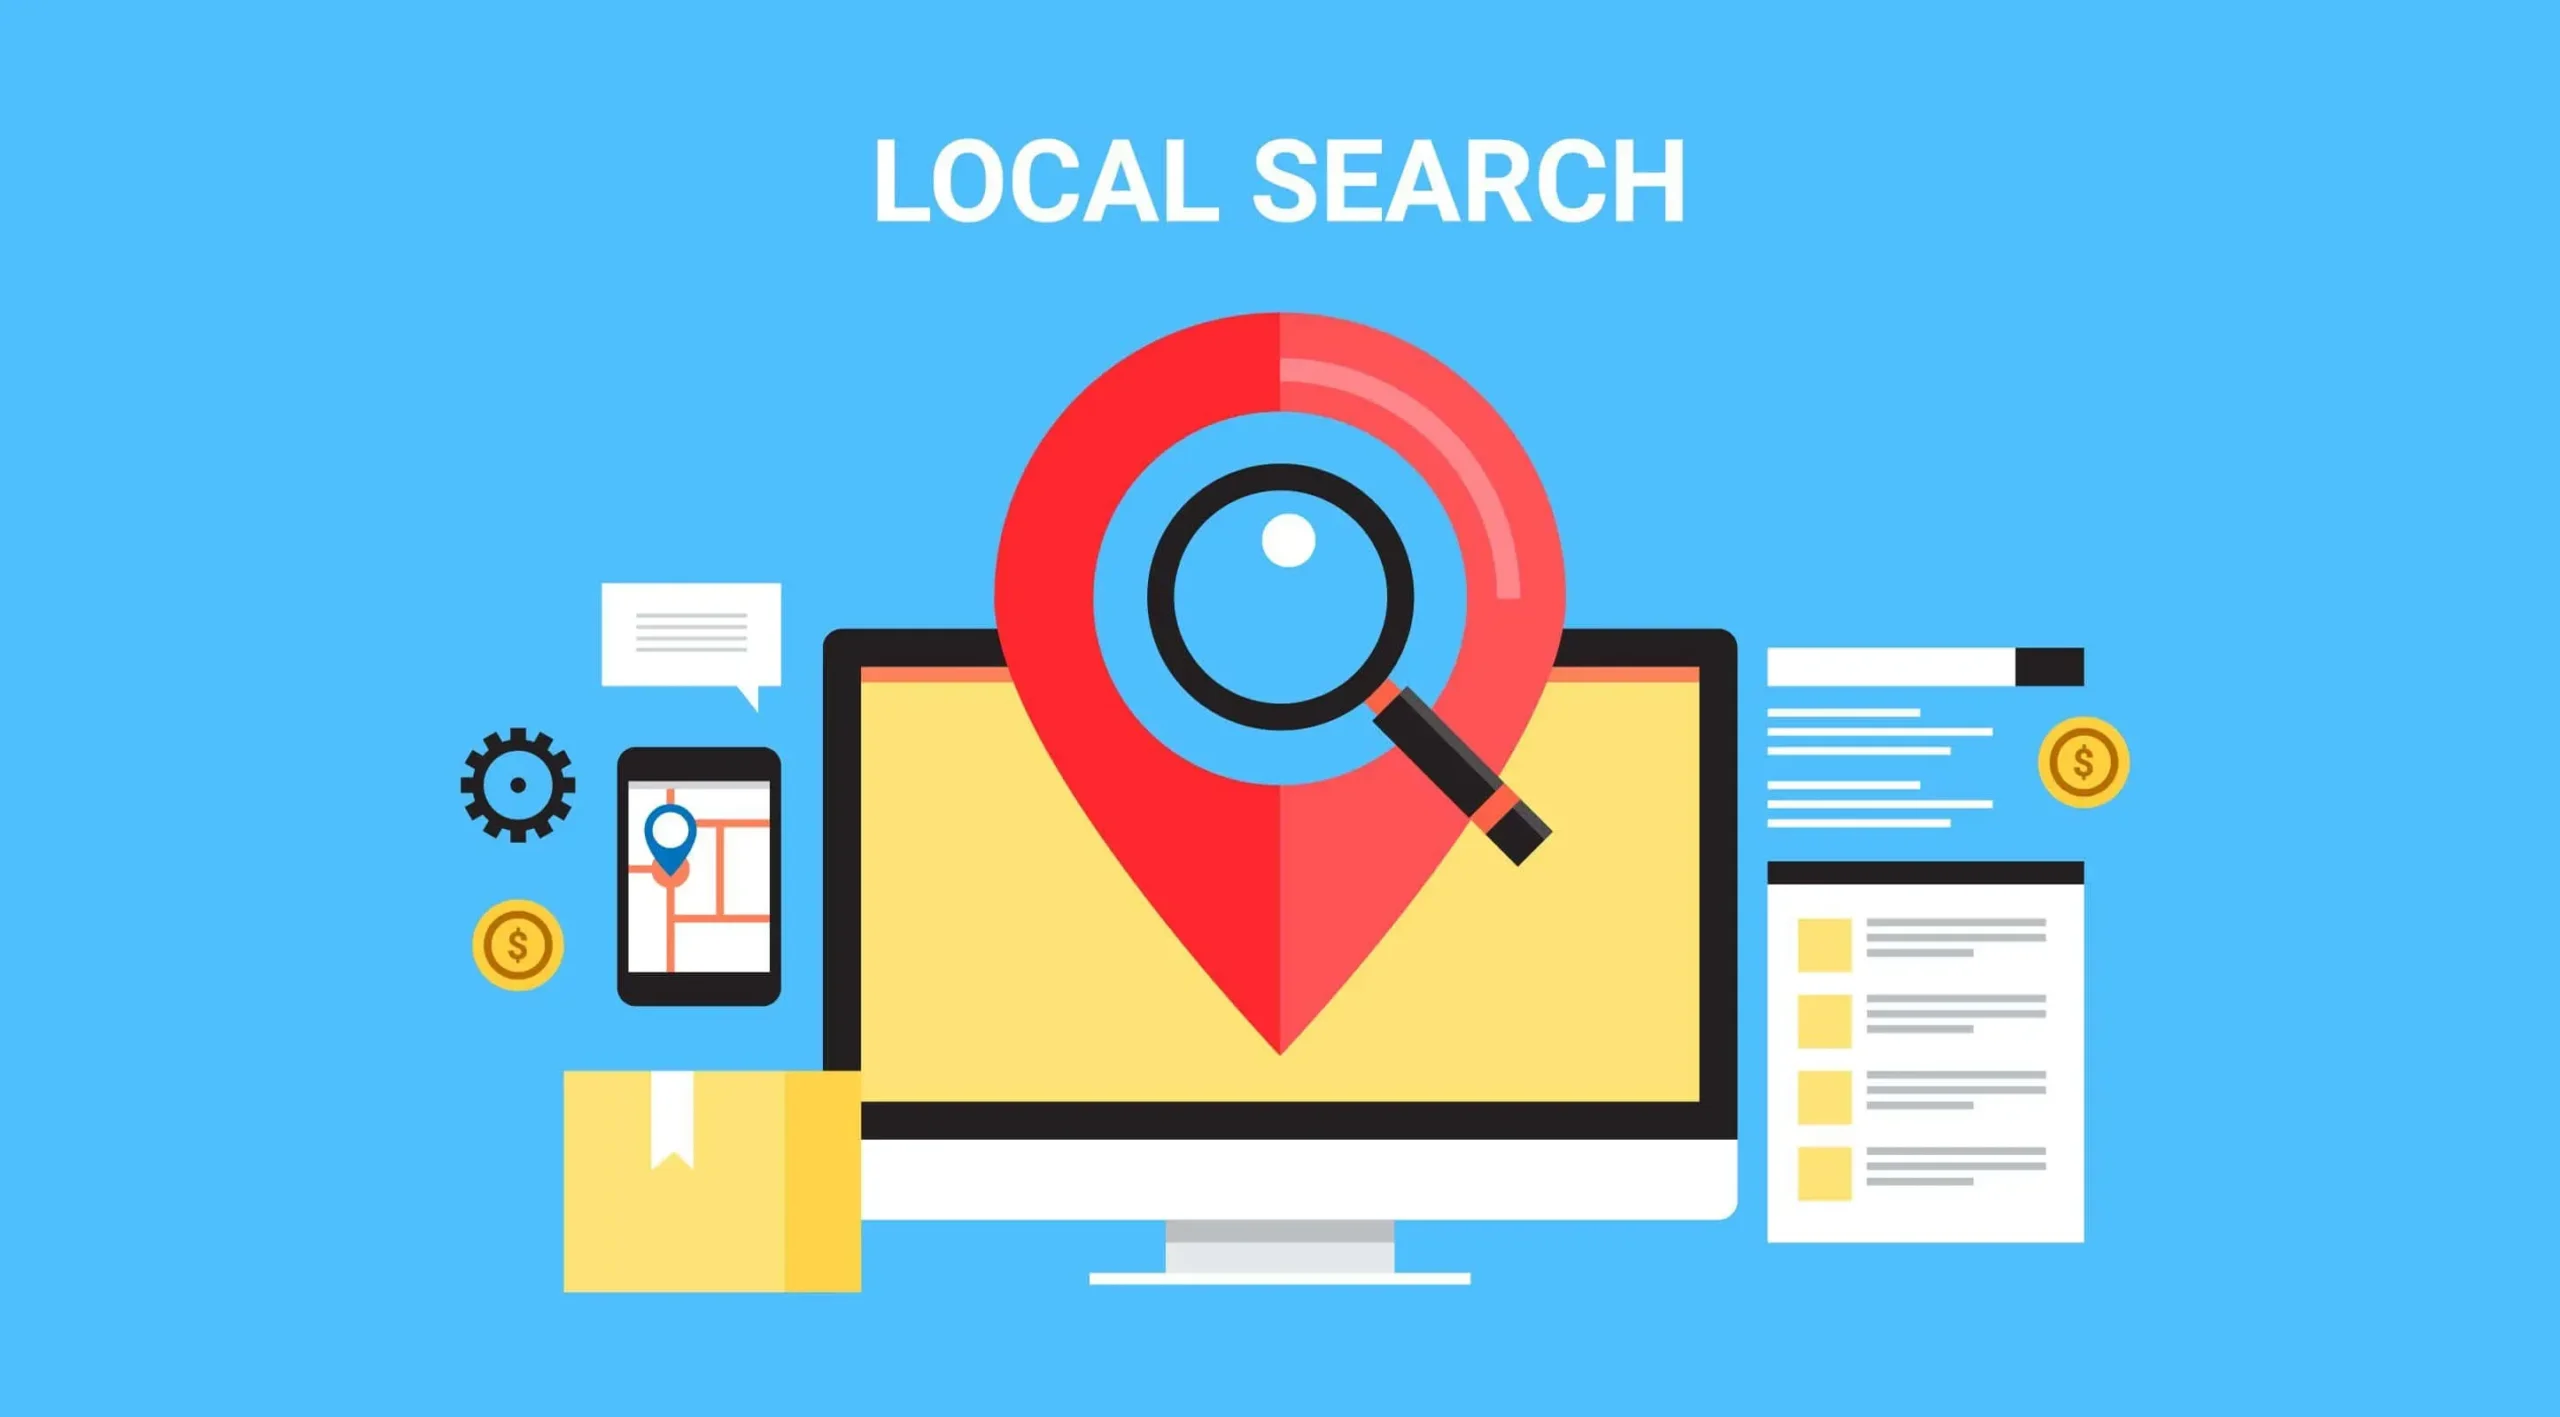 abc-media.net google local search tips